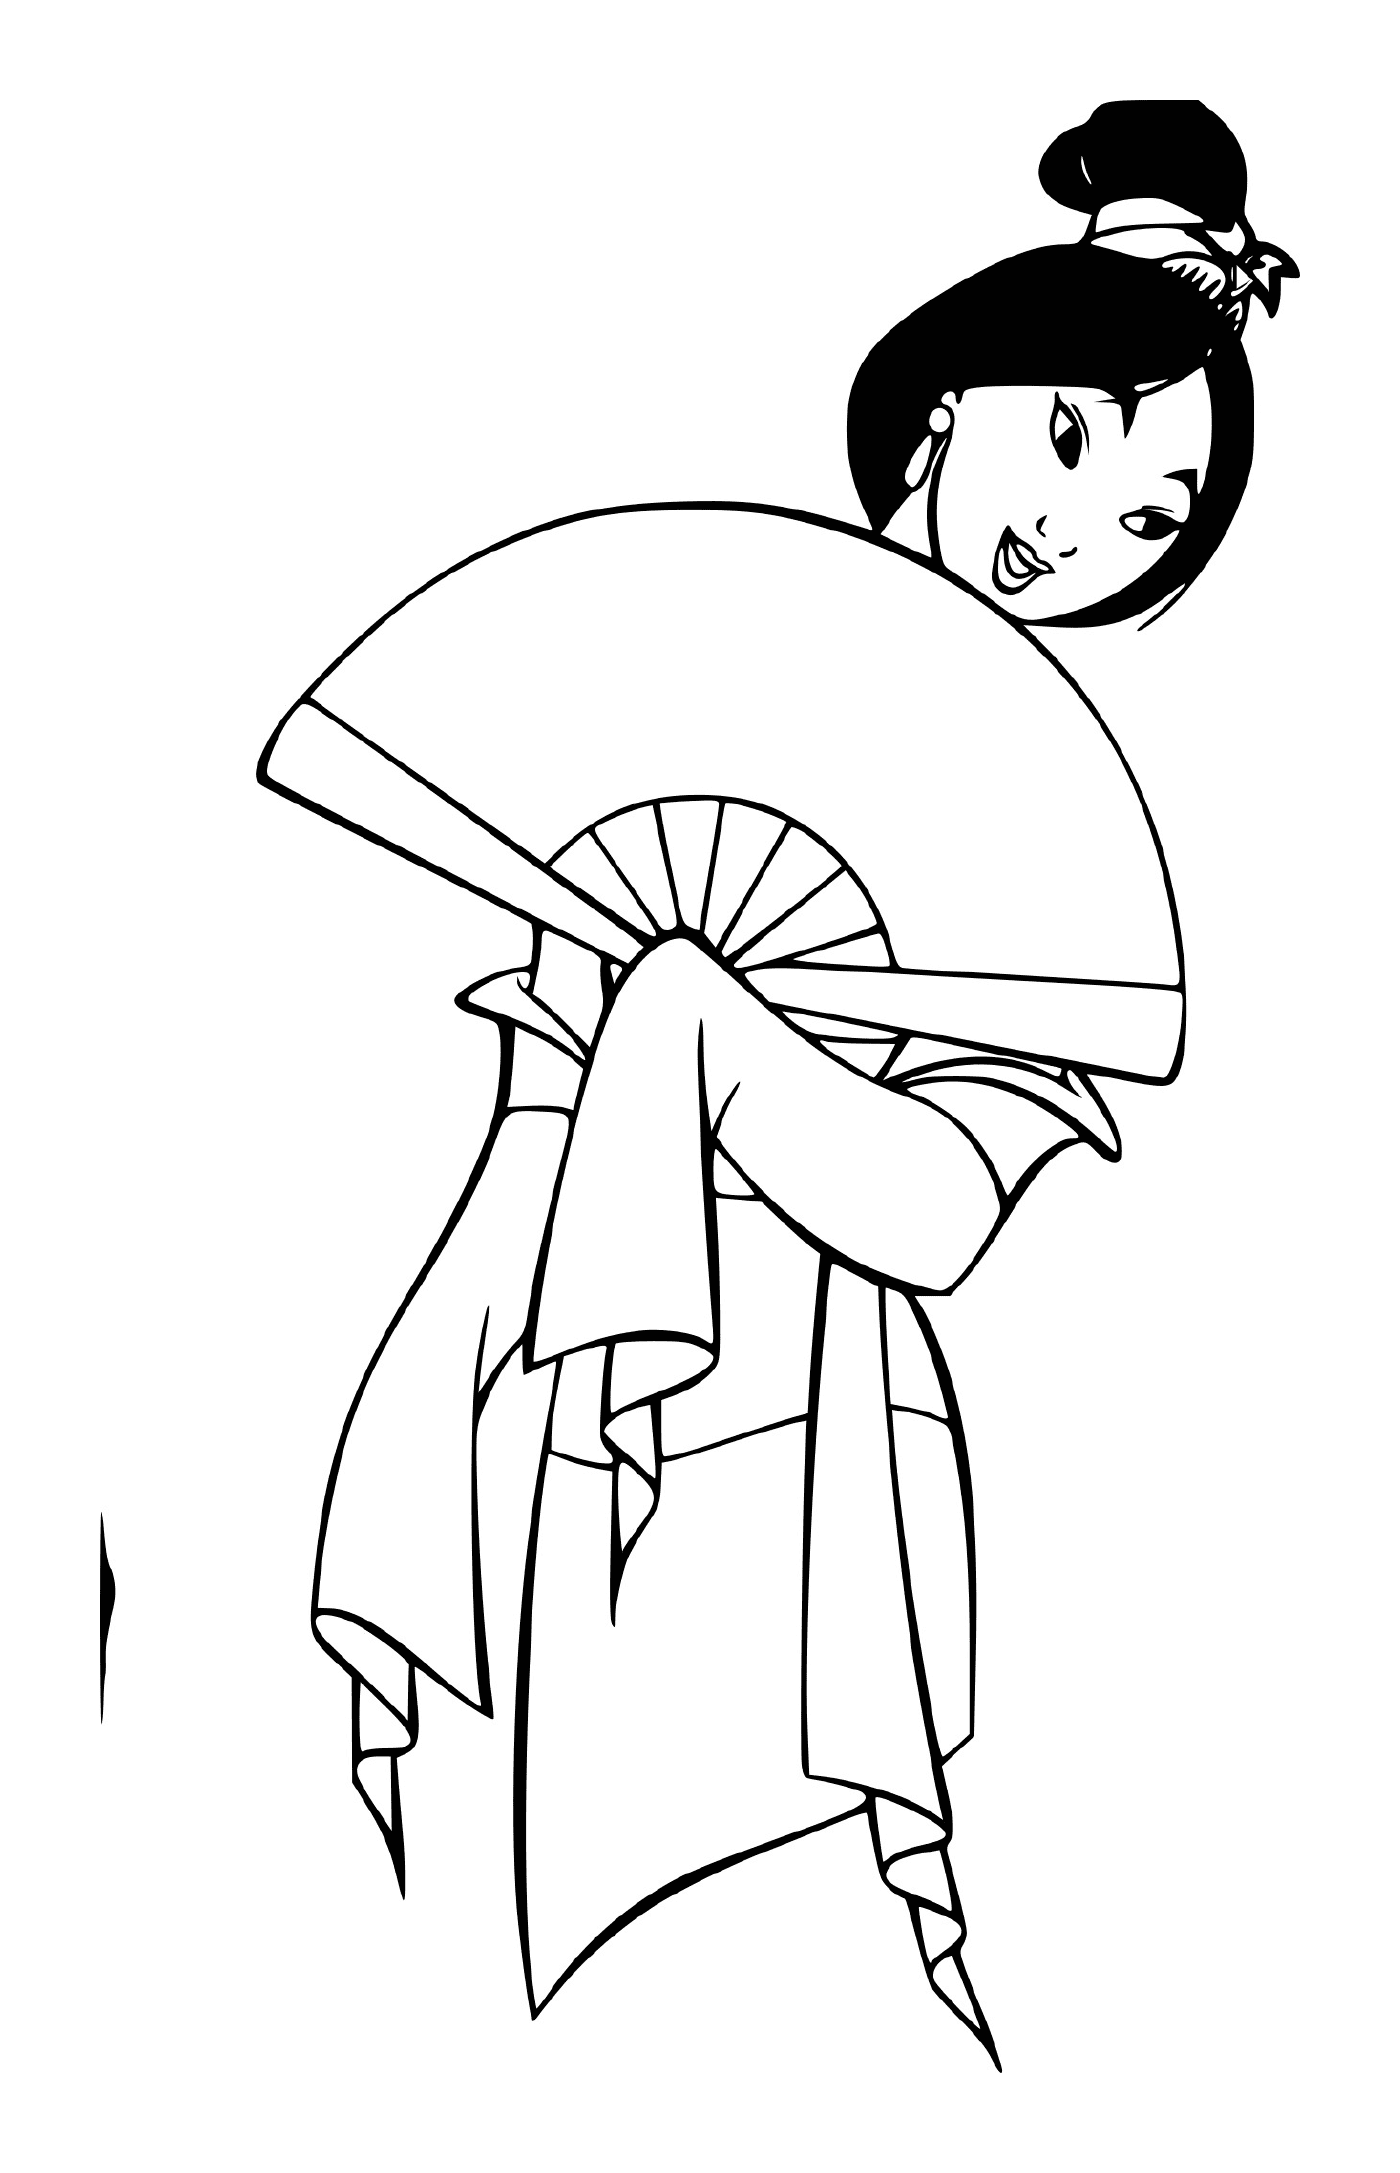  Mulan im traditionellen Outfit 